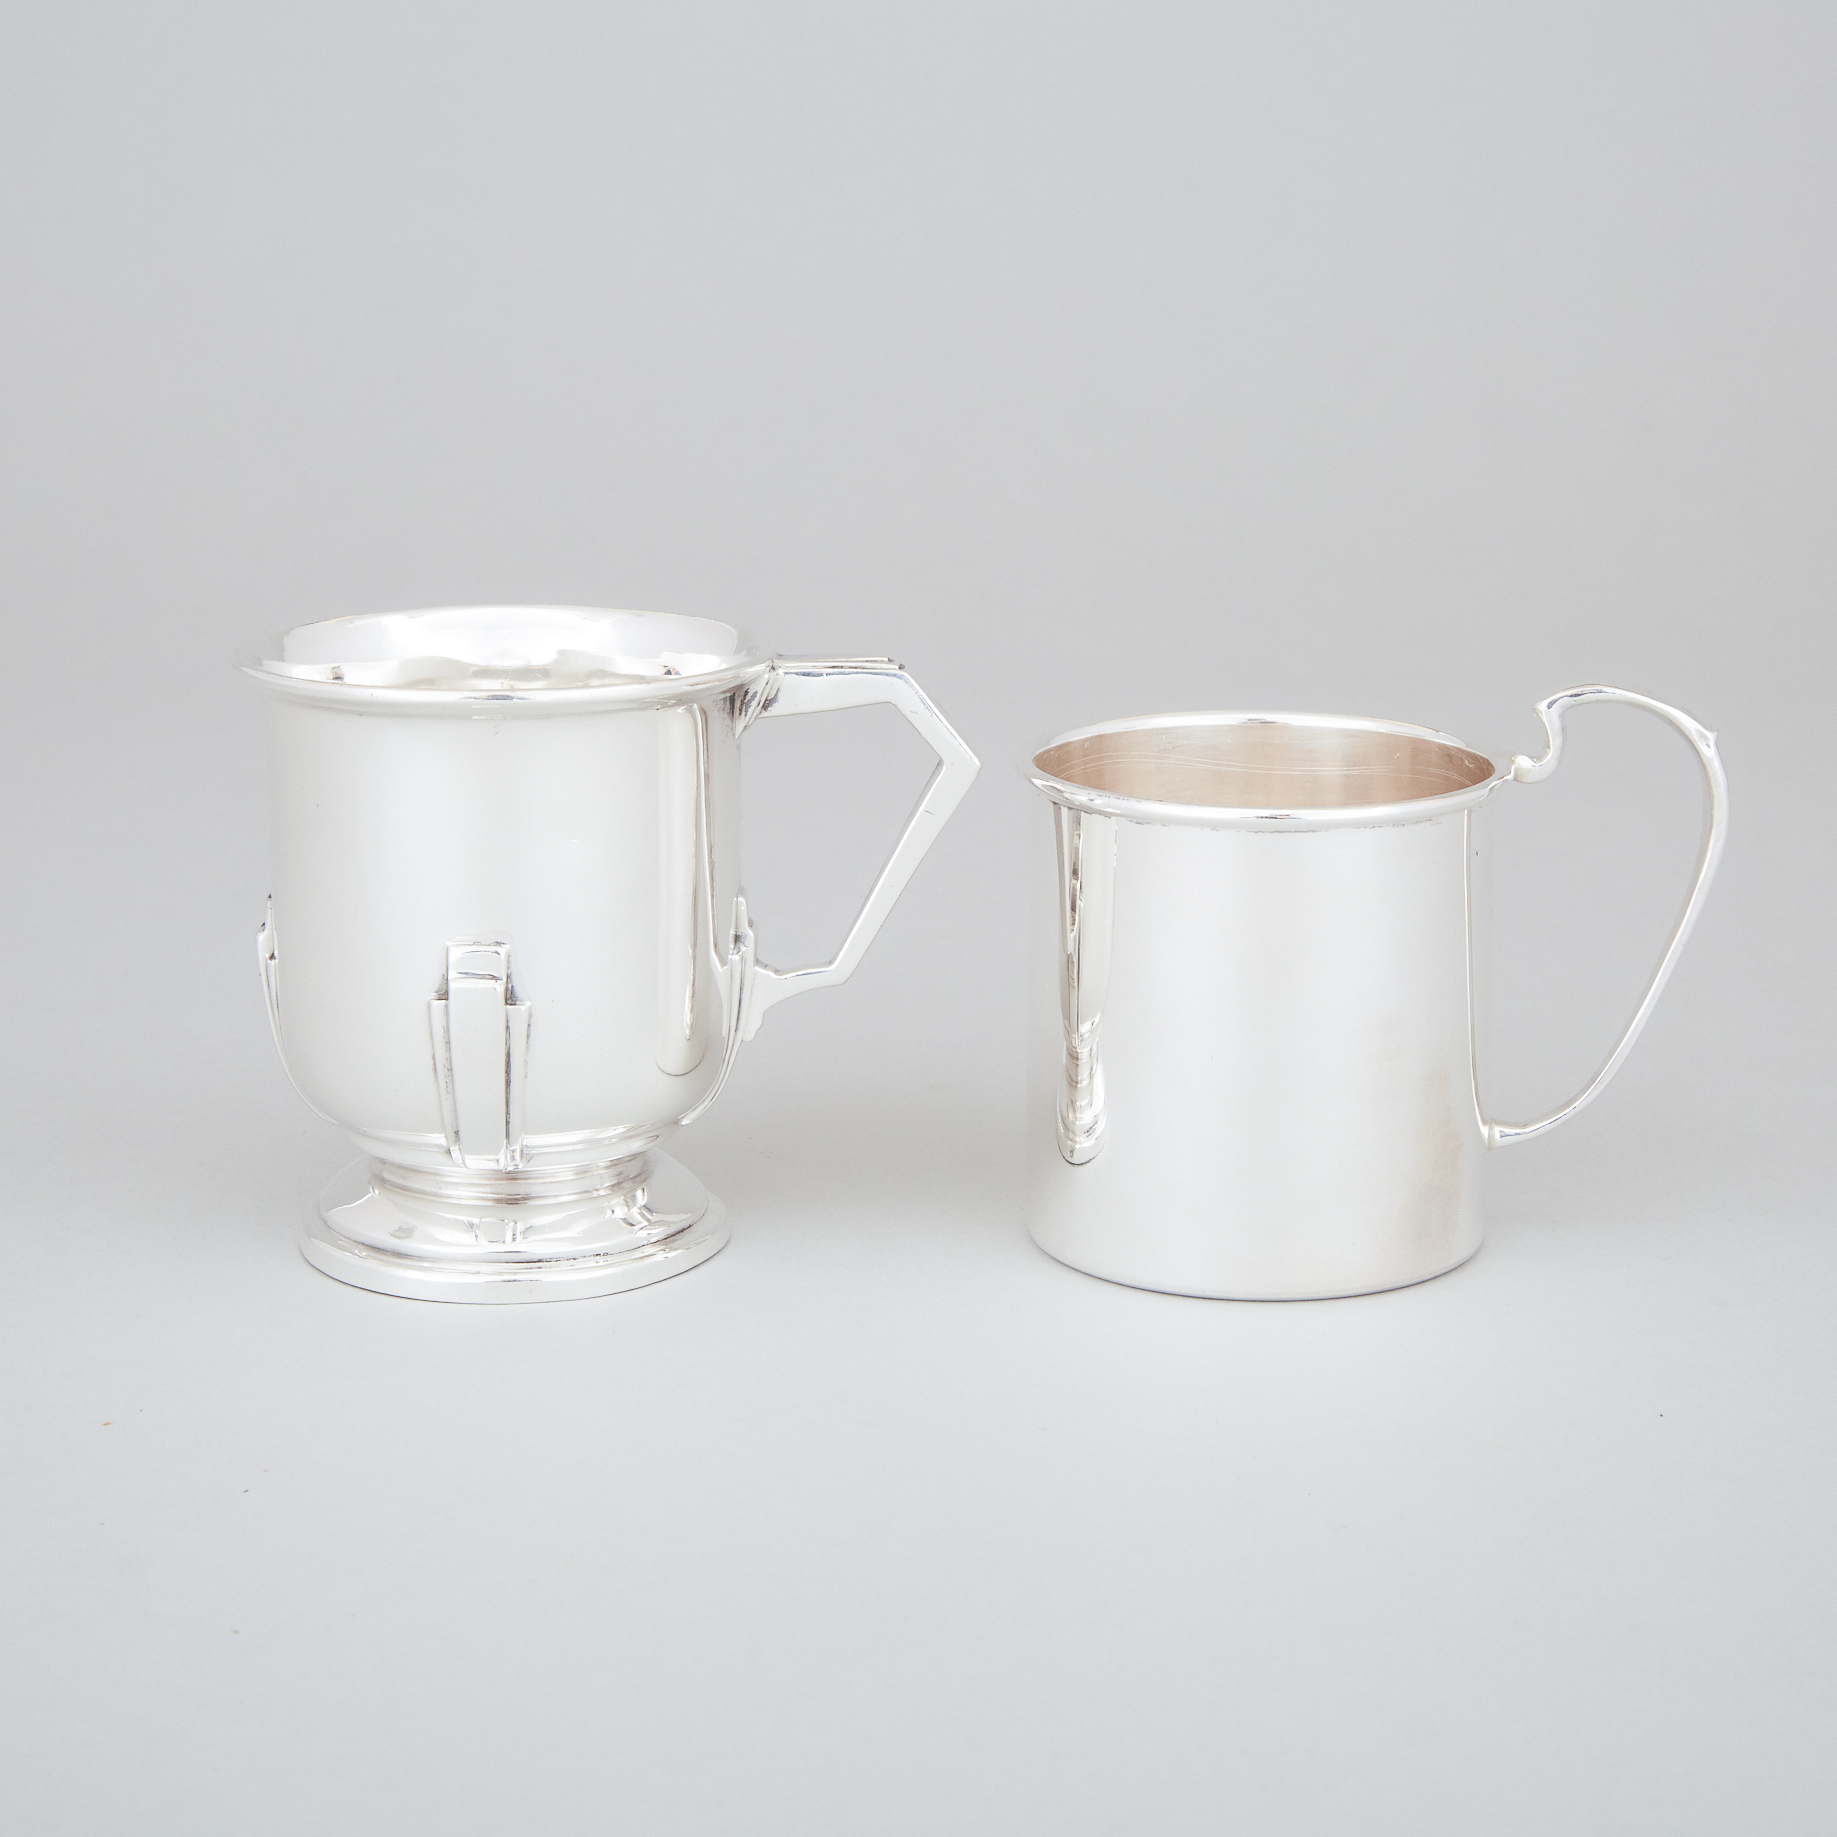 English Silver Small Mug, Walker & Hall, Sheffield, 1938 and a Canadian Mug, Emerson Houghton, Toronto, Ont., mid-20th century